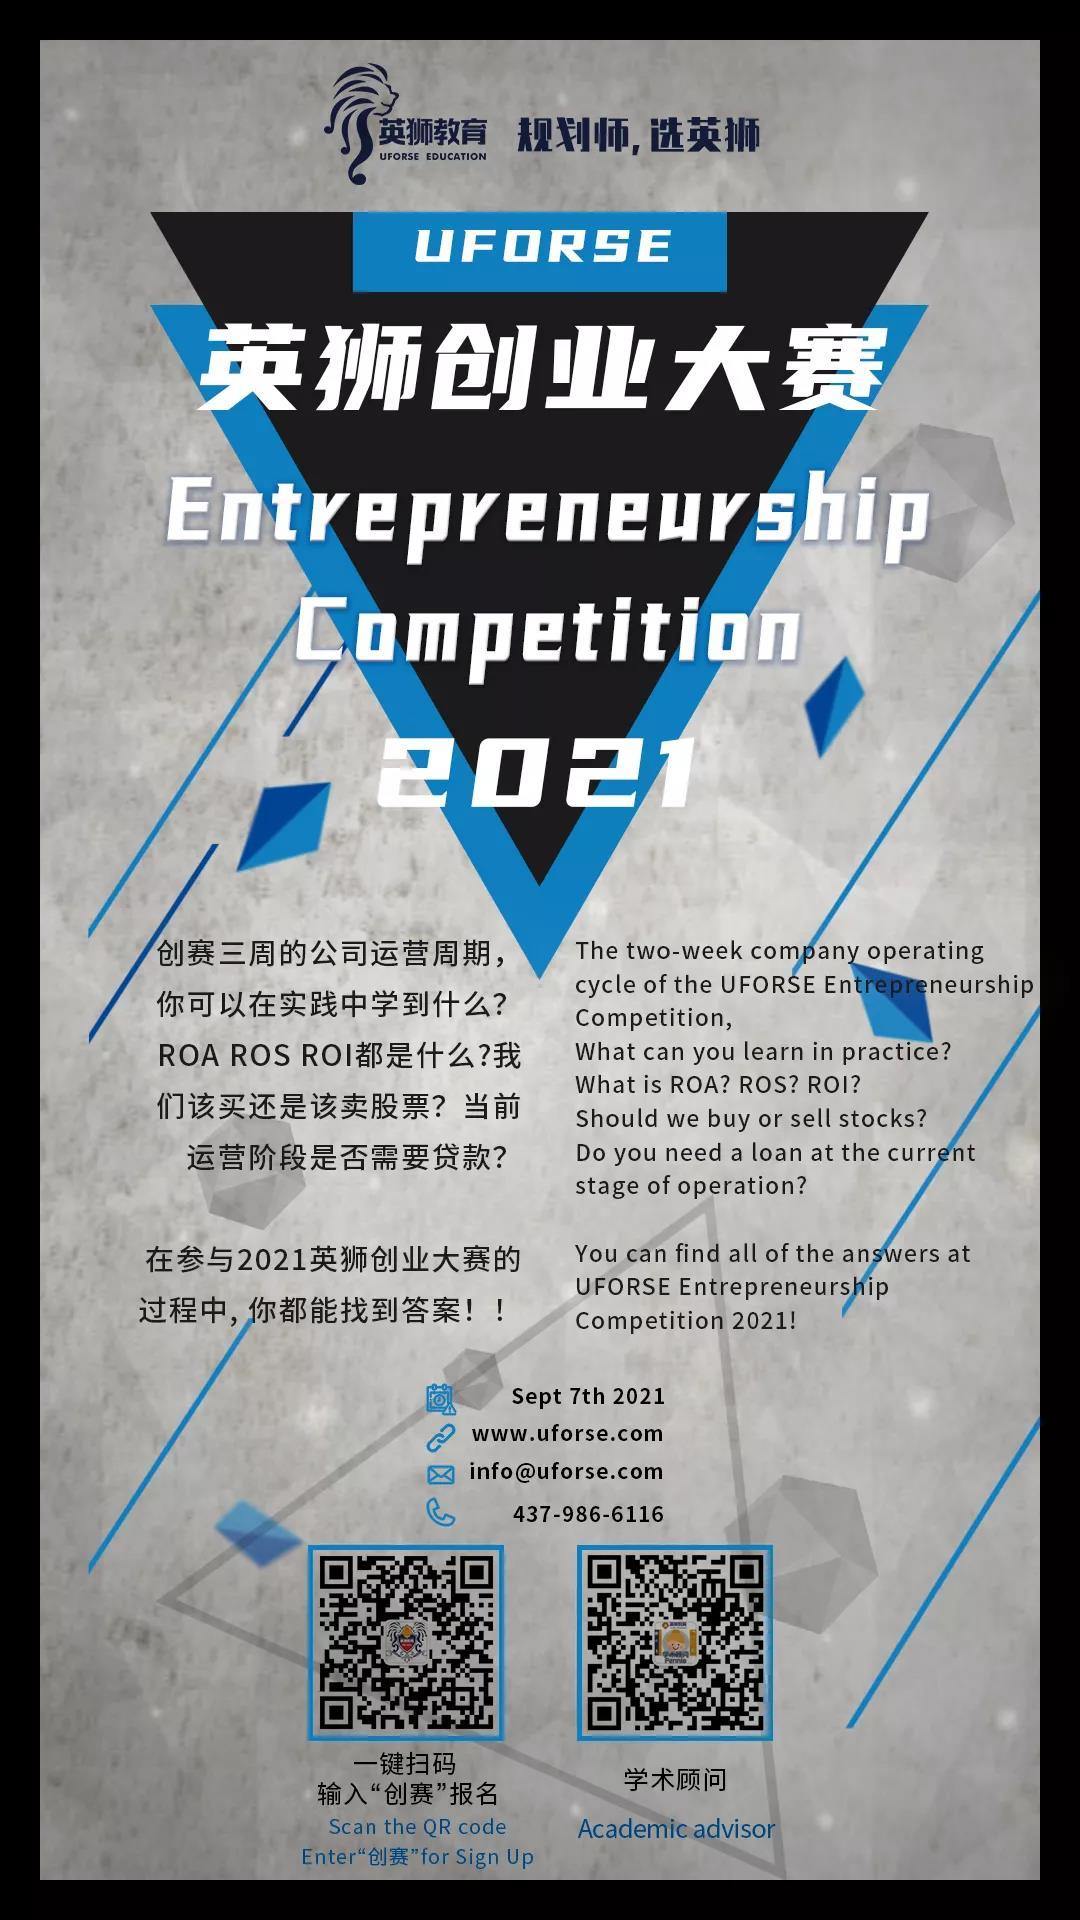 Uforse Entrepreneurship Competition(英狮创业大赛) - Uforse Education